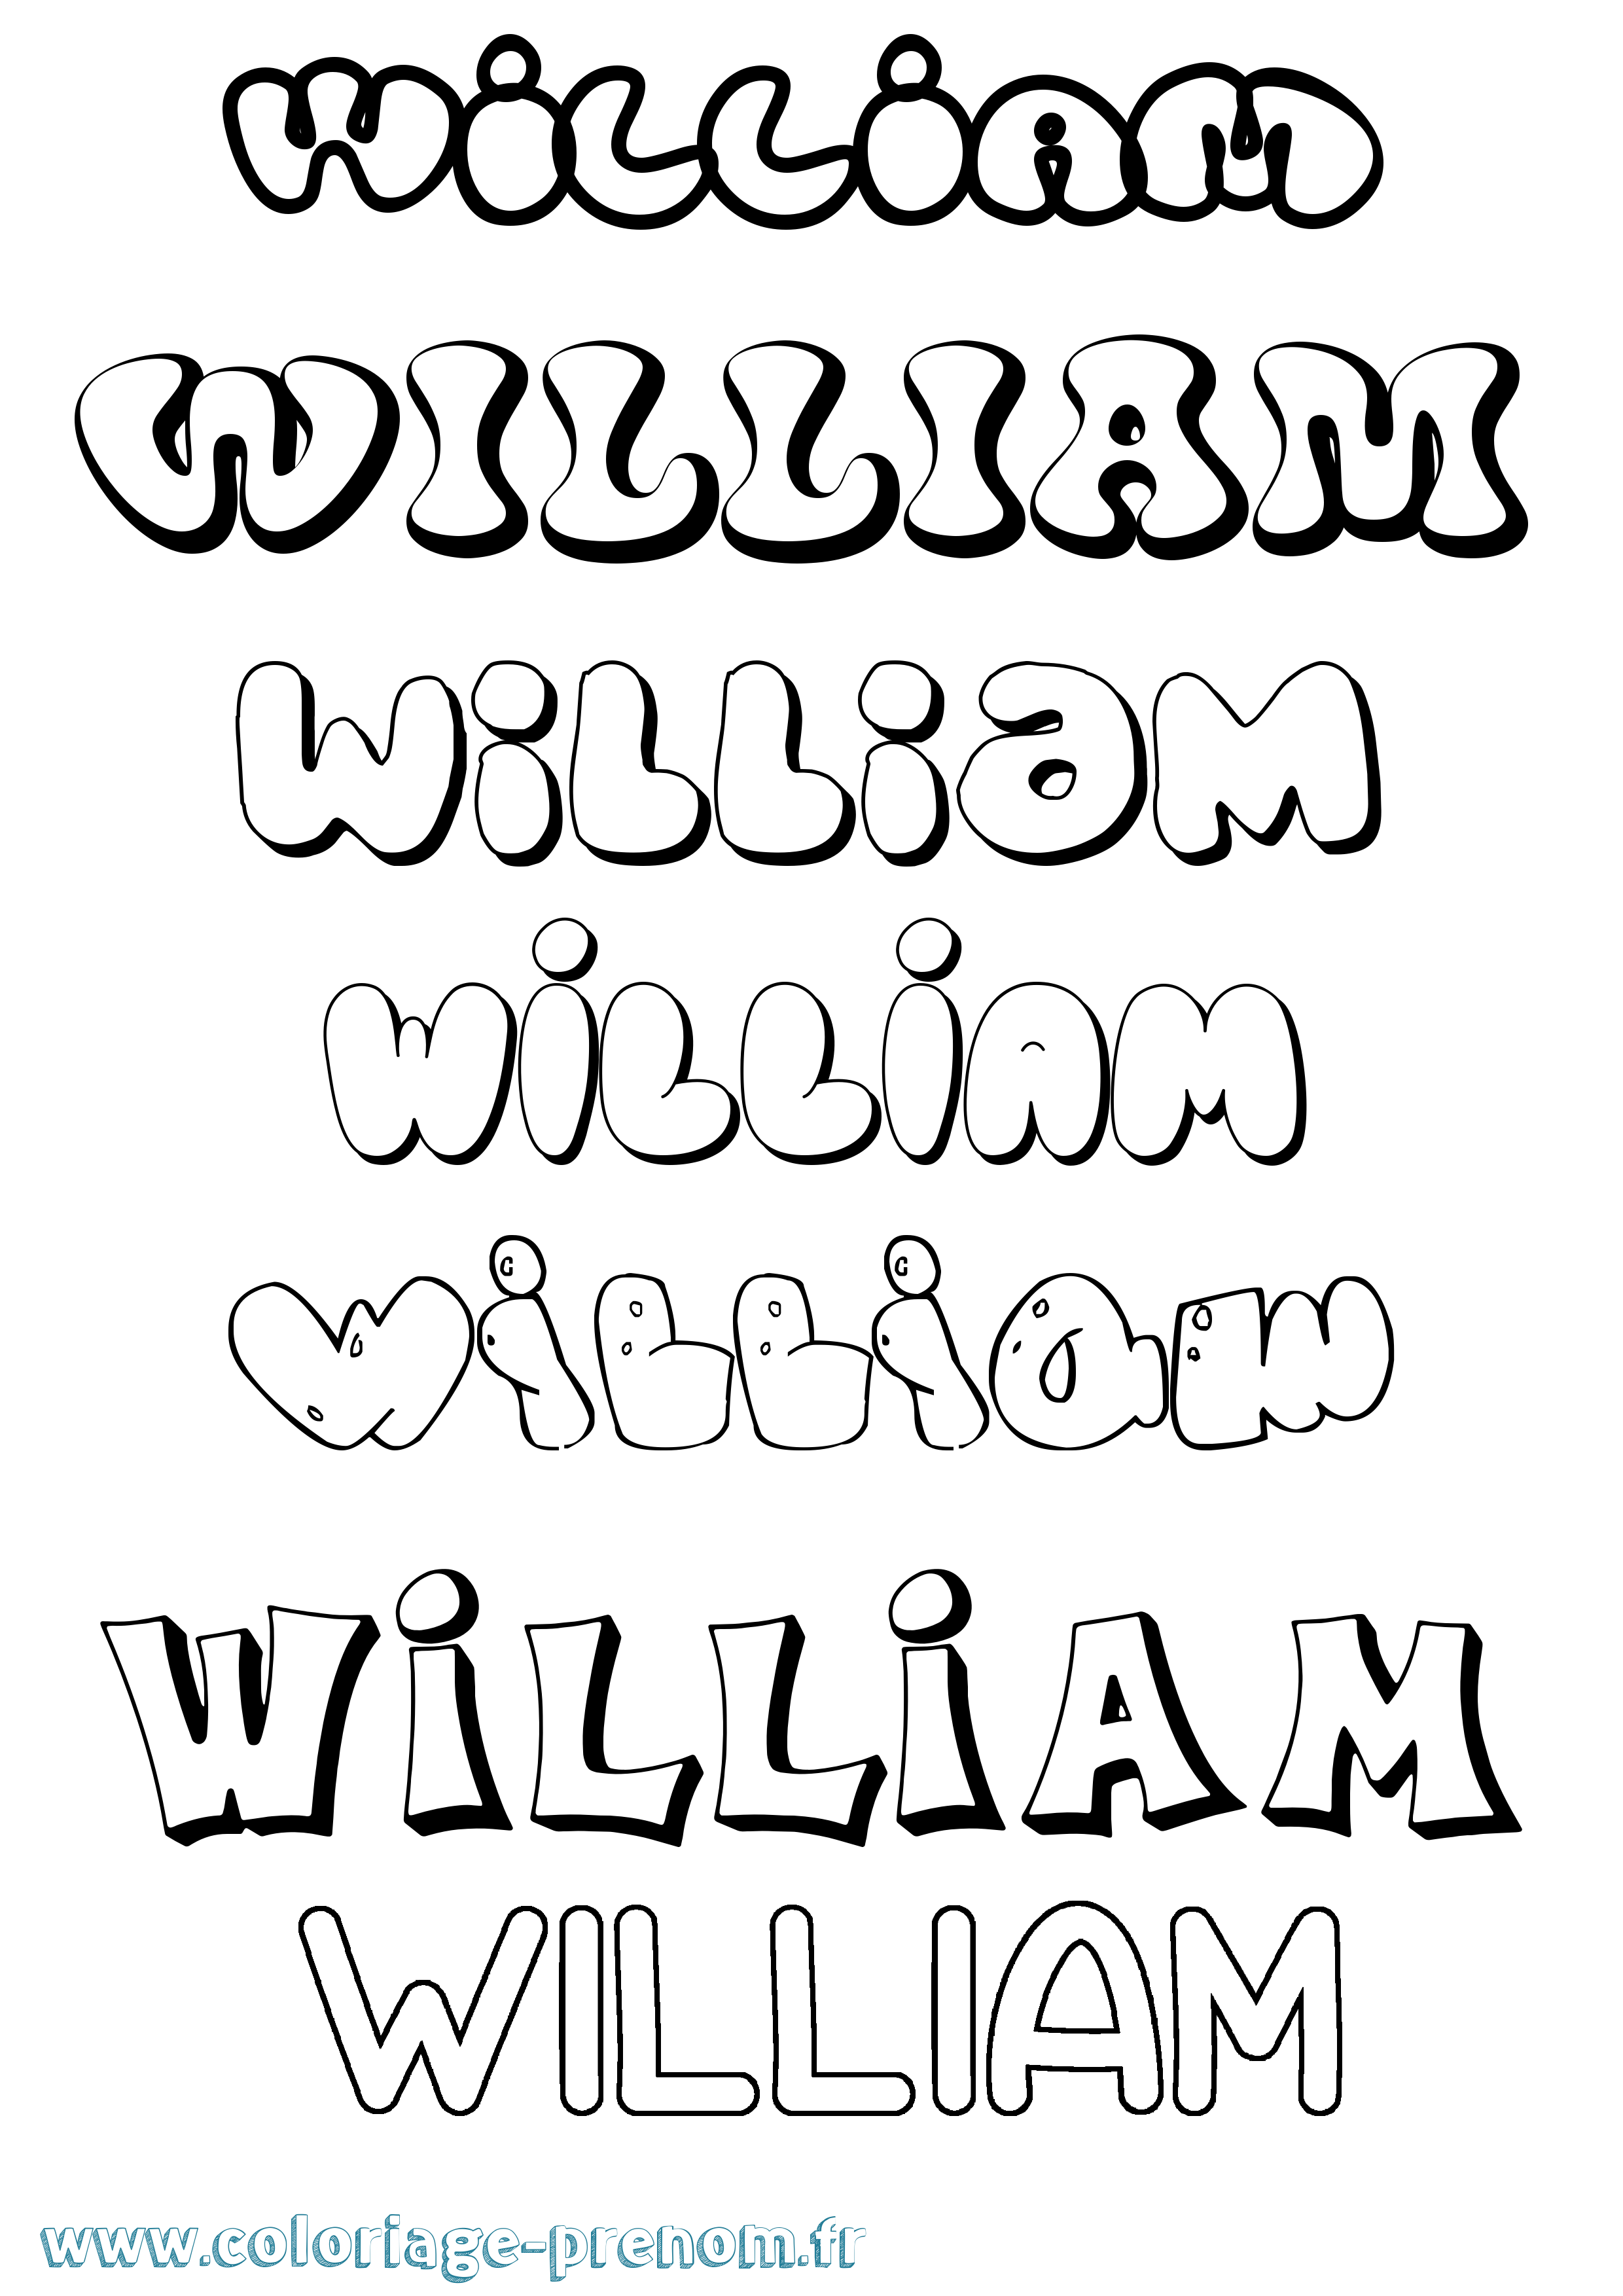 Coloriage prénom William Bubble